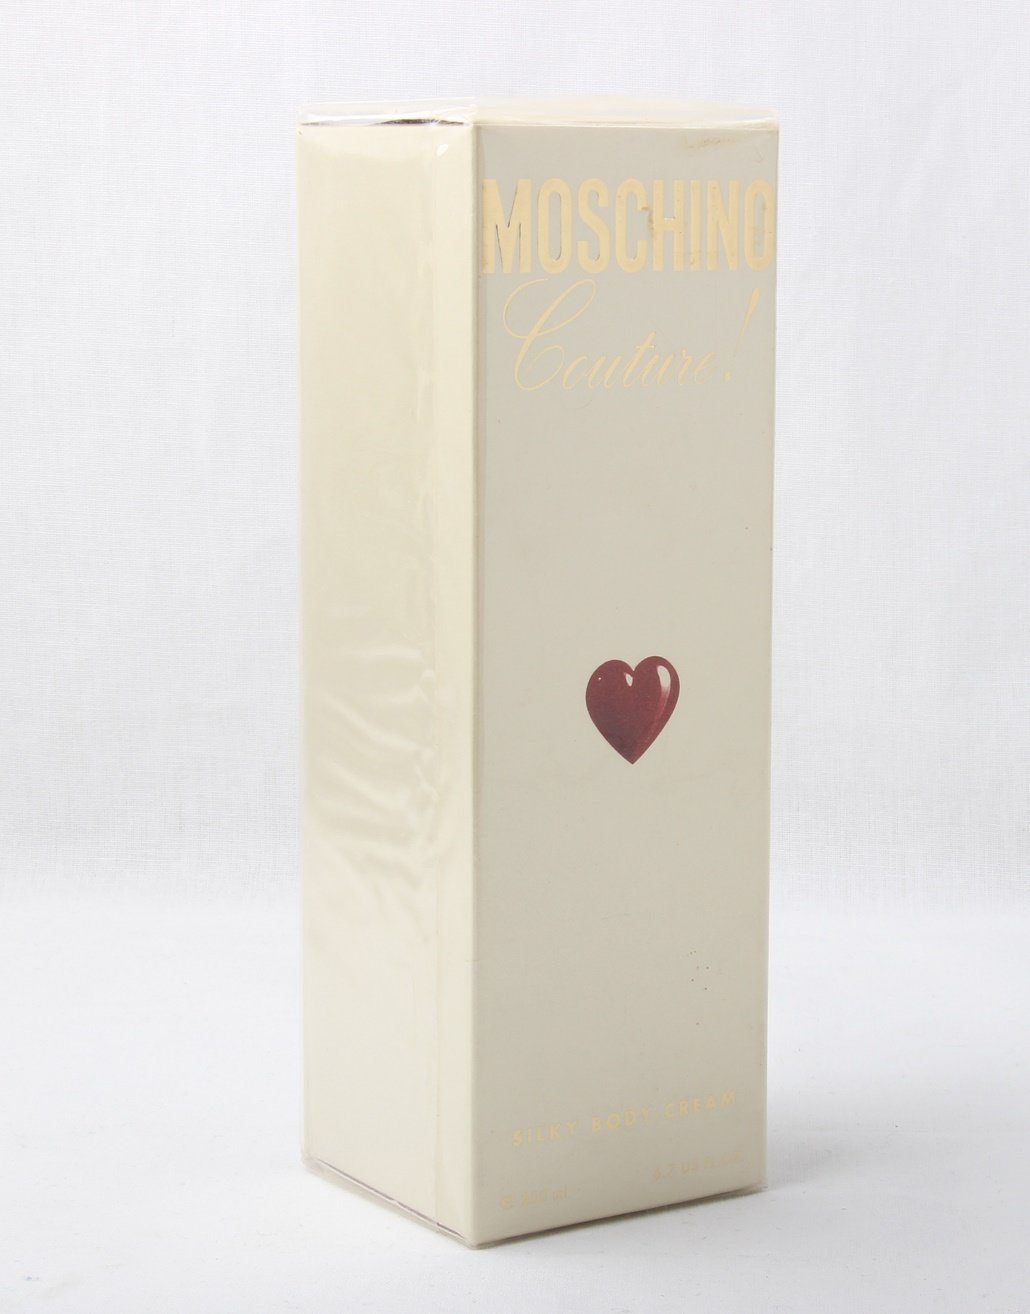 Moschino Body 200ml Couture Silky Moschino Cream Toilette de Eau